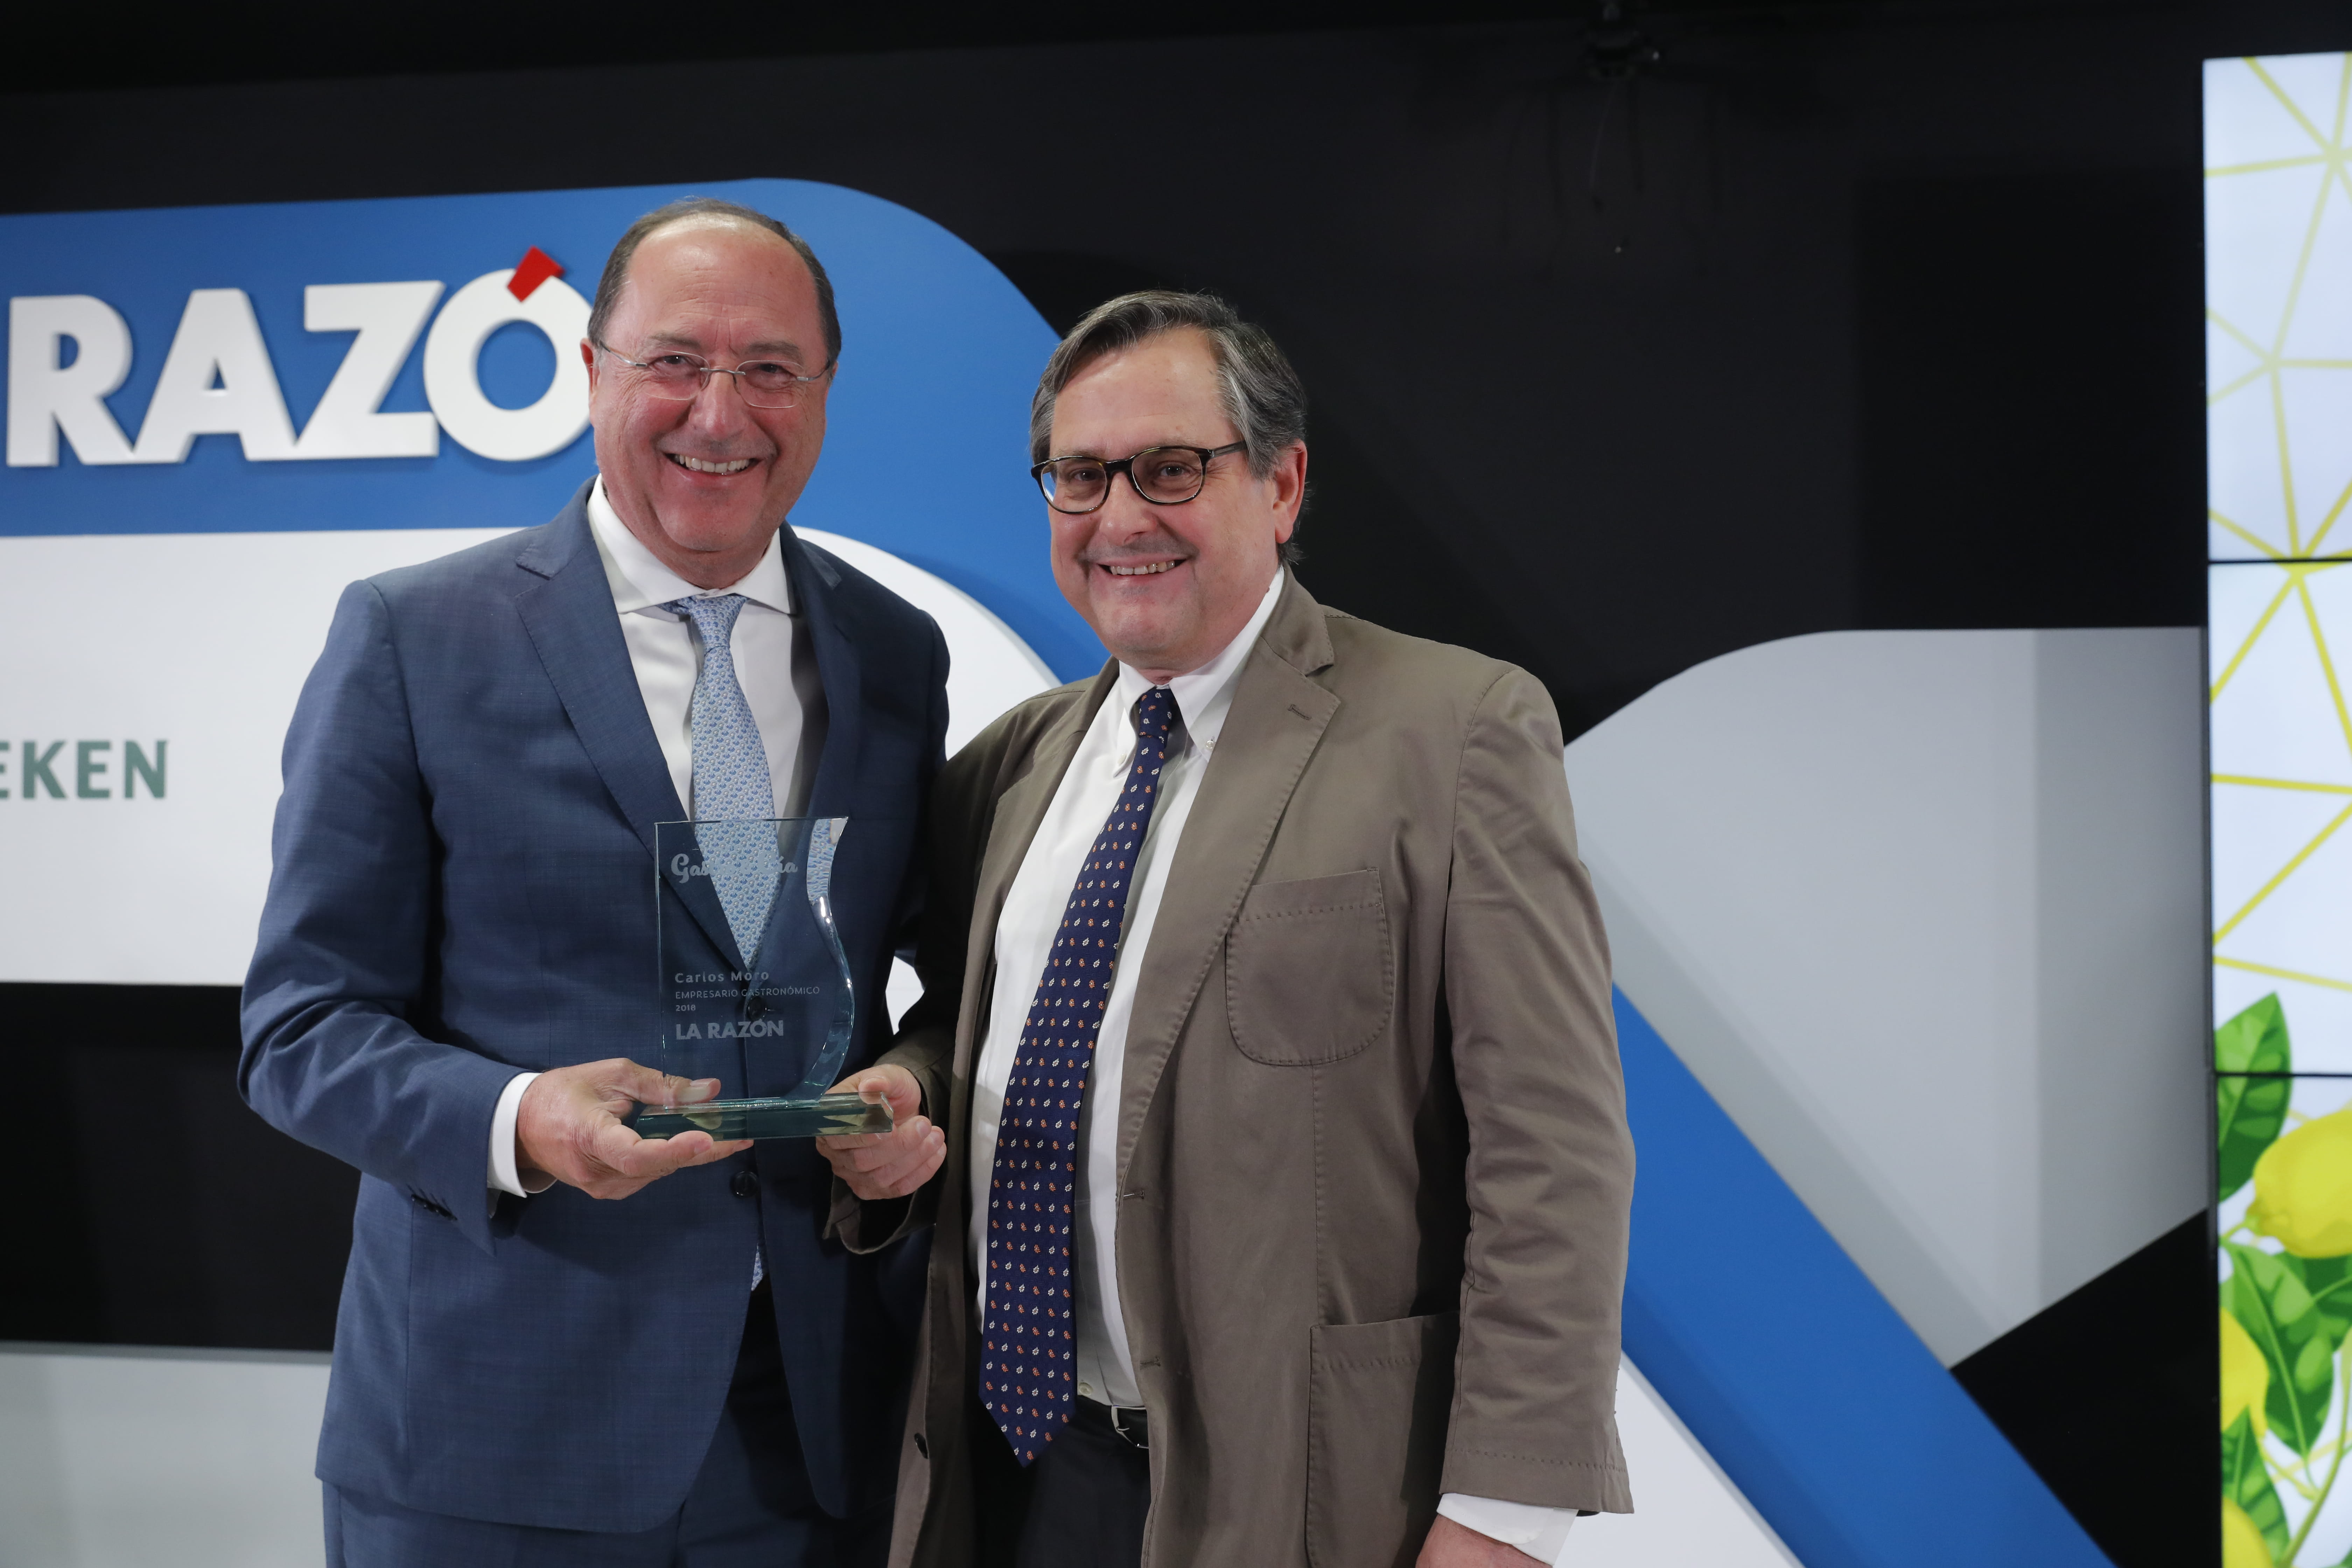 Carlos Moro receives La Razón’s Gastronomic Businessman of the Year award